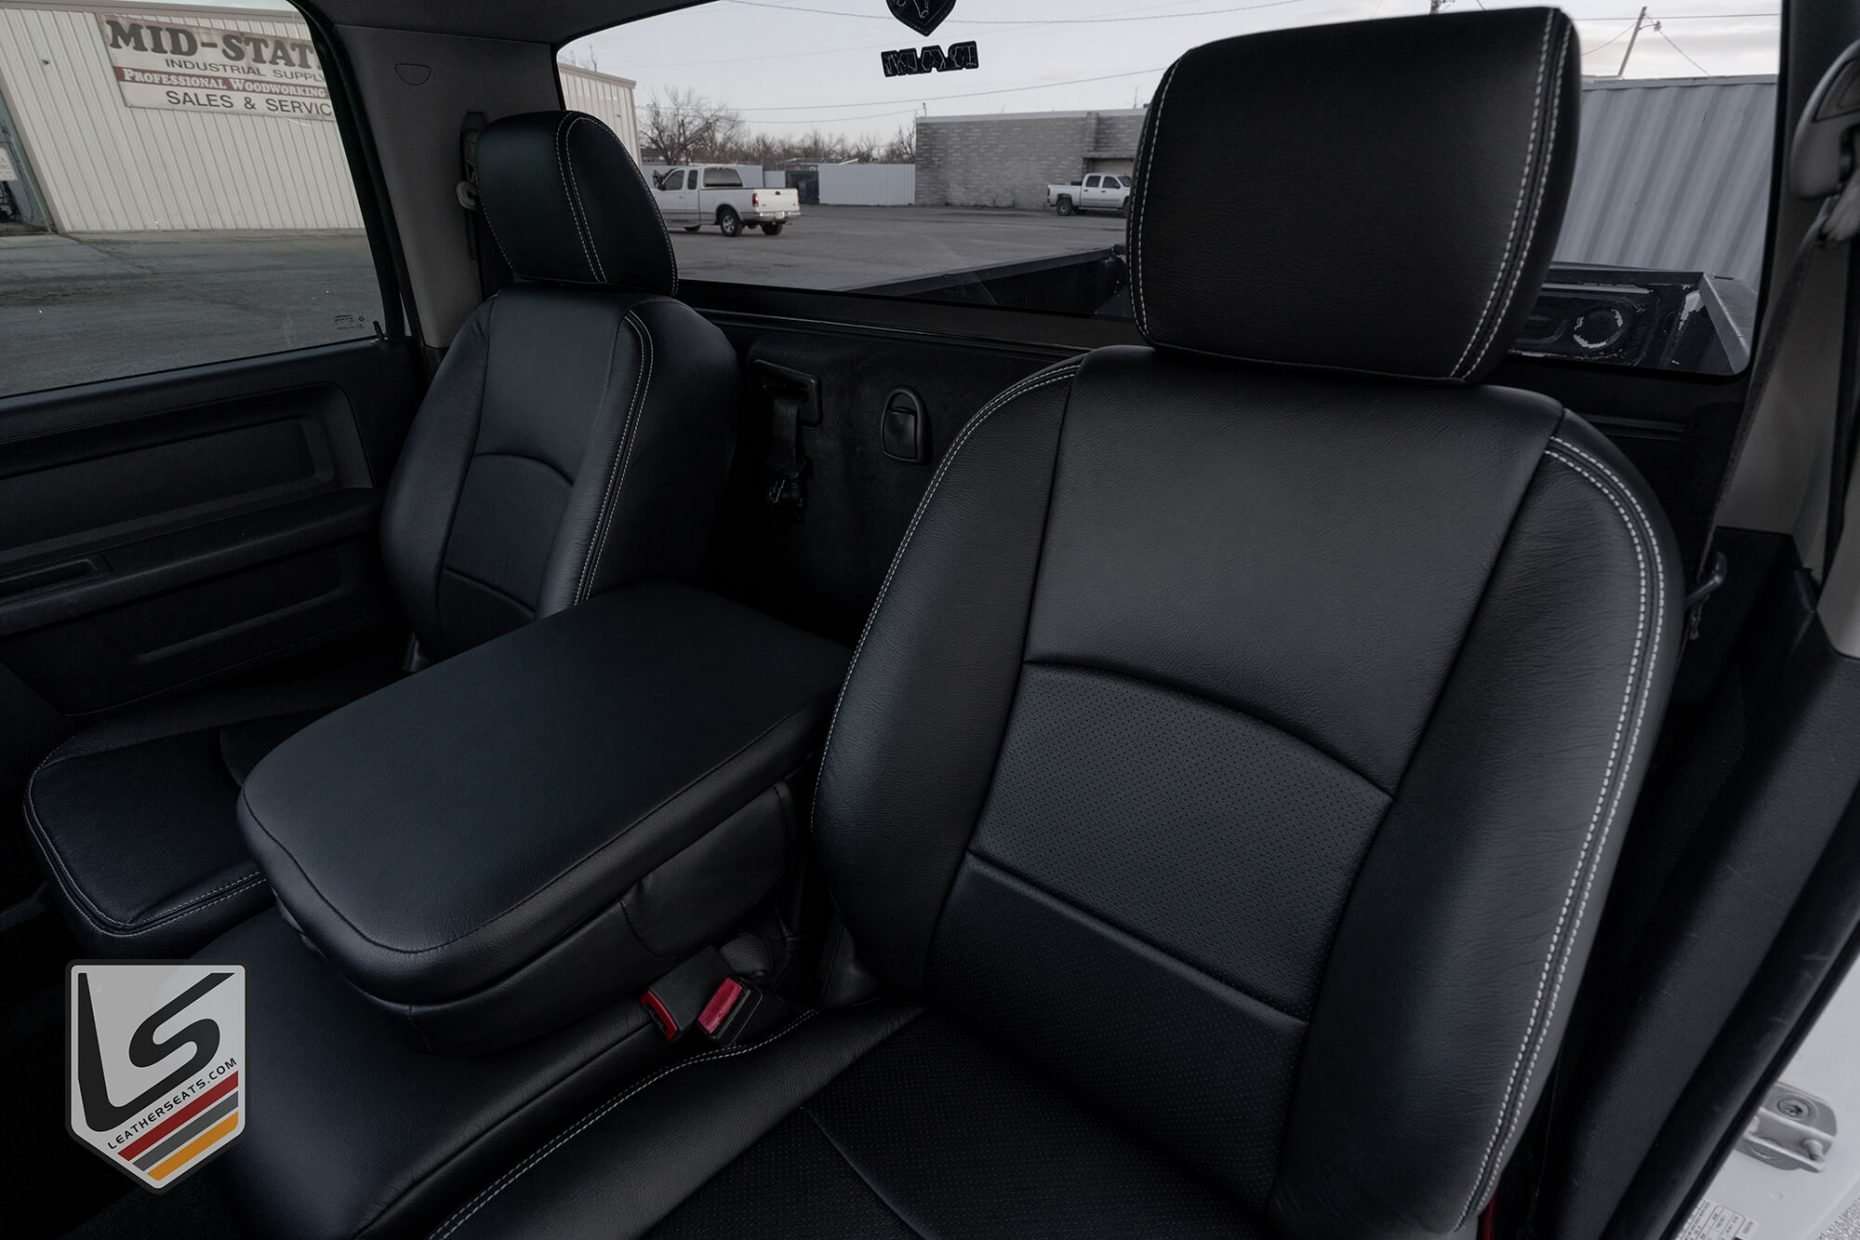 Dodge Ram Reg Cab front backrest and headrest of driver's seat